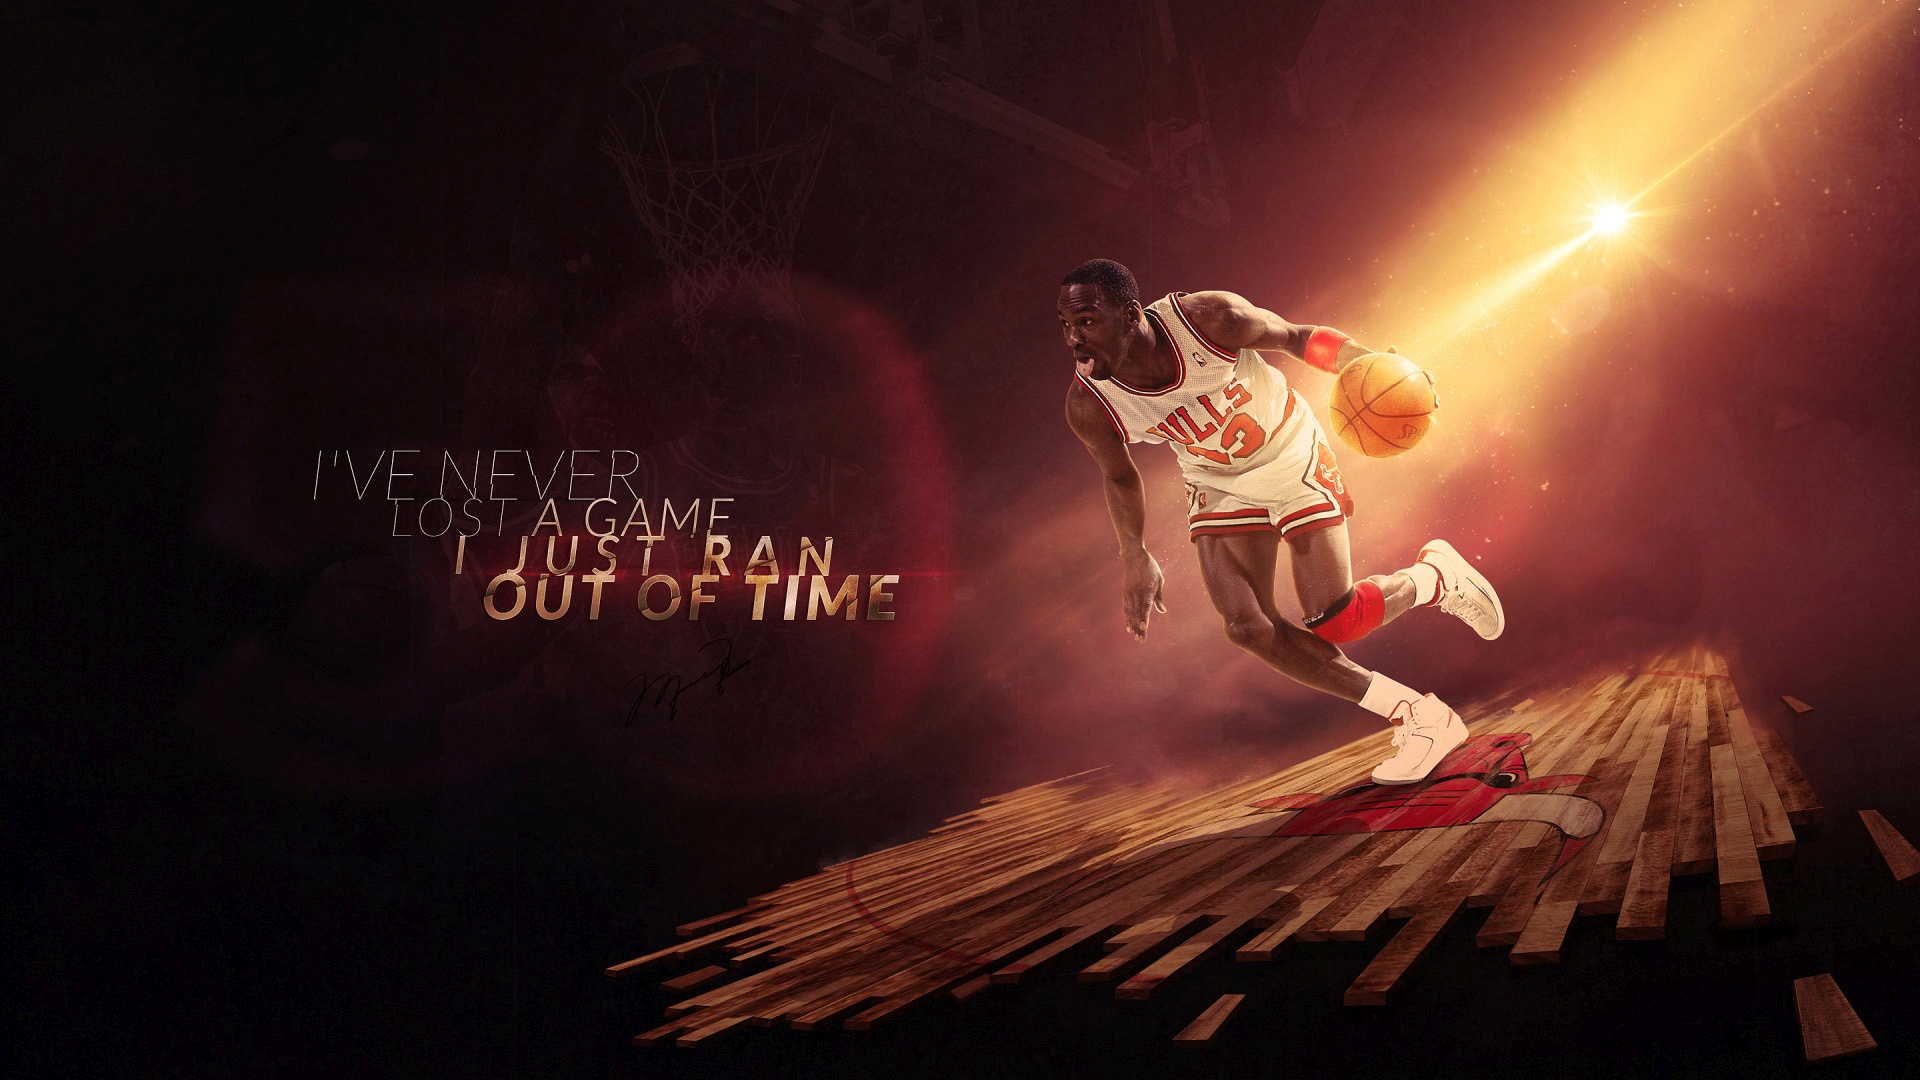 Michael Jordan best wallpaper